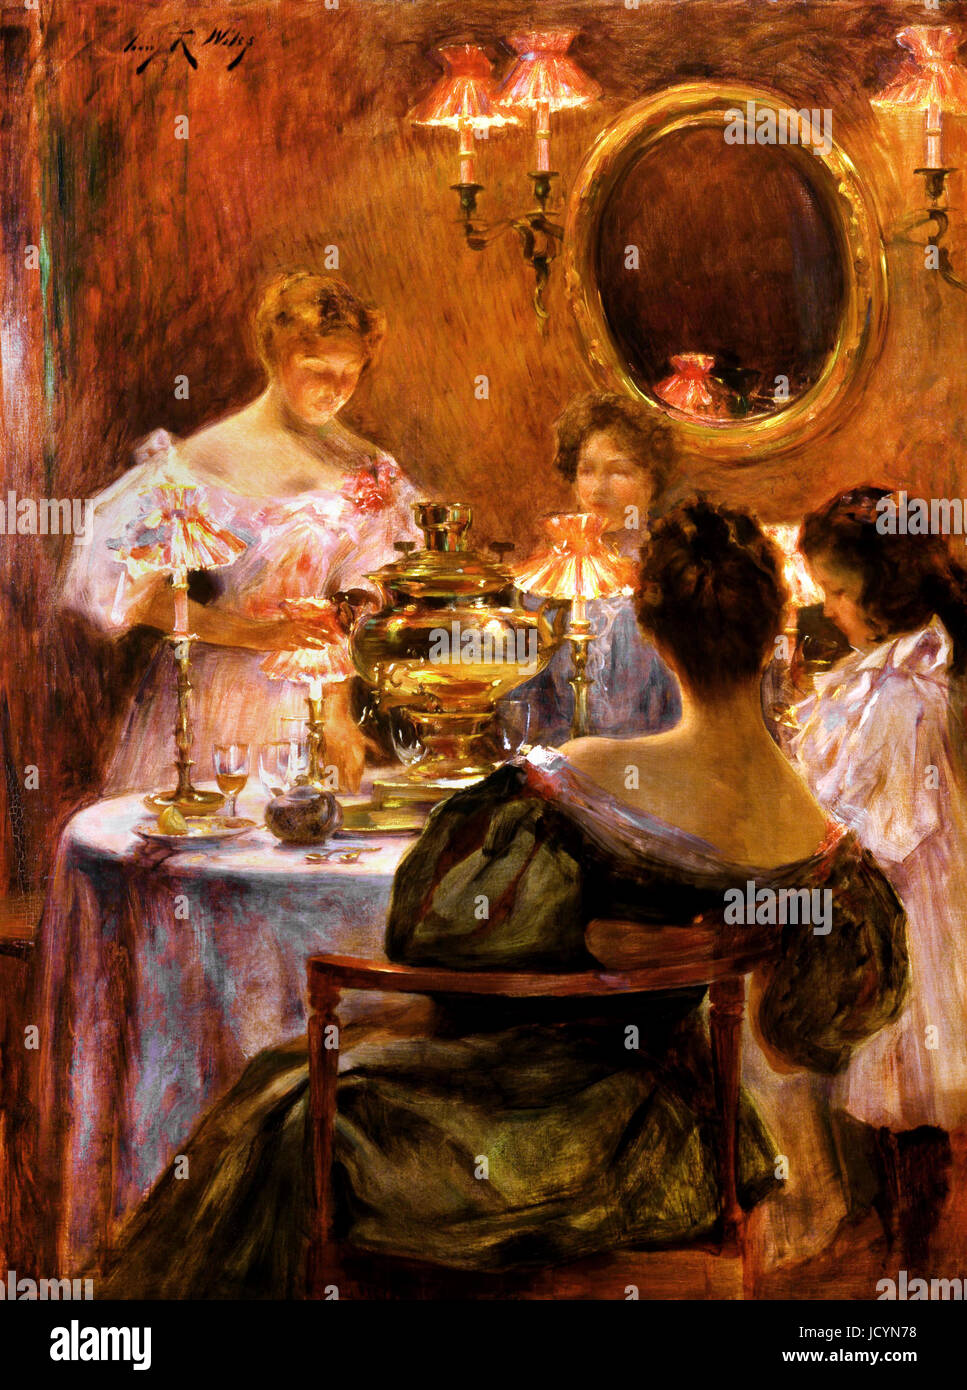 Irving R. Wiles, russischer Tee ca. 1896. Öl auf Leinwand. Smithsonian American Art Museum, Washington, D.C., USA. Stockfoto